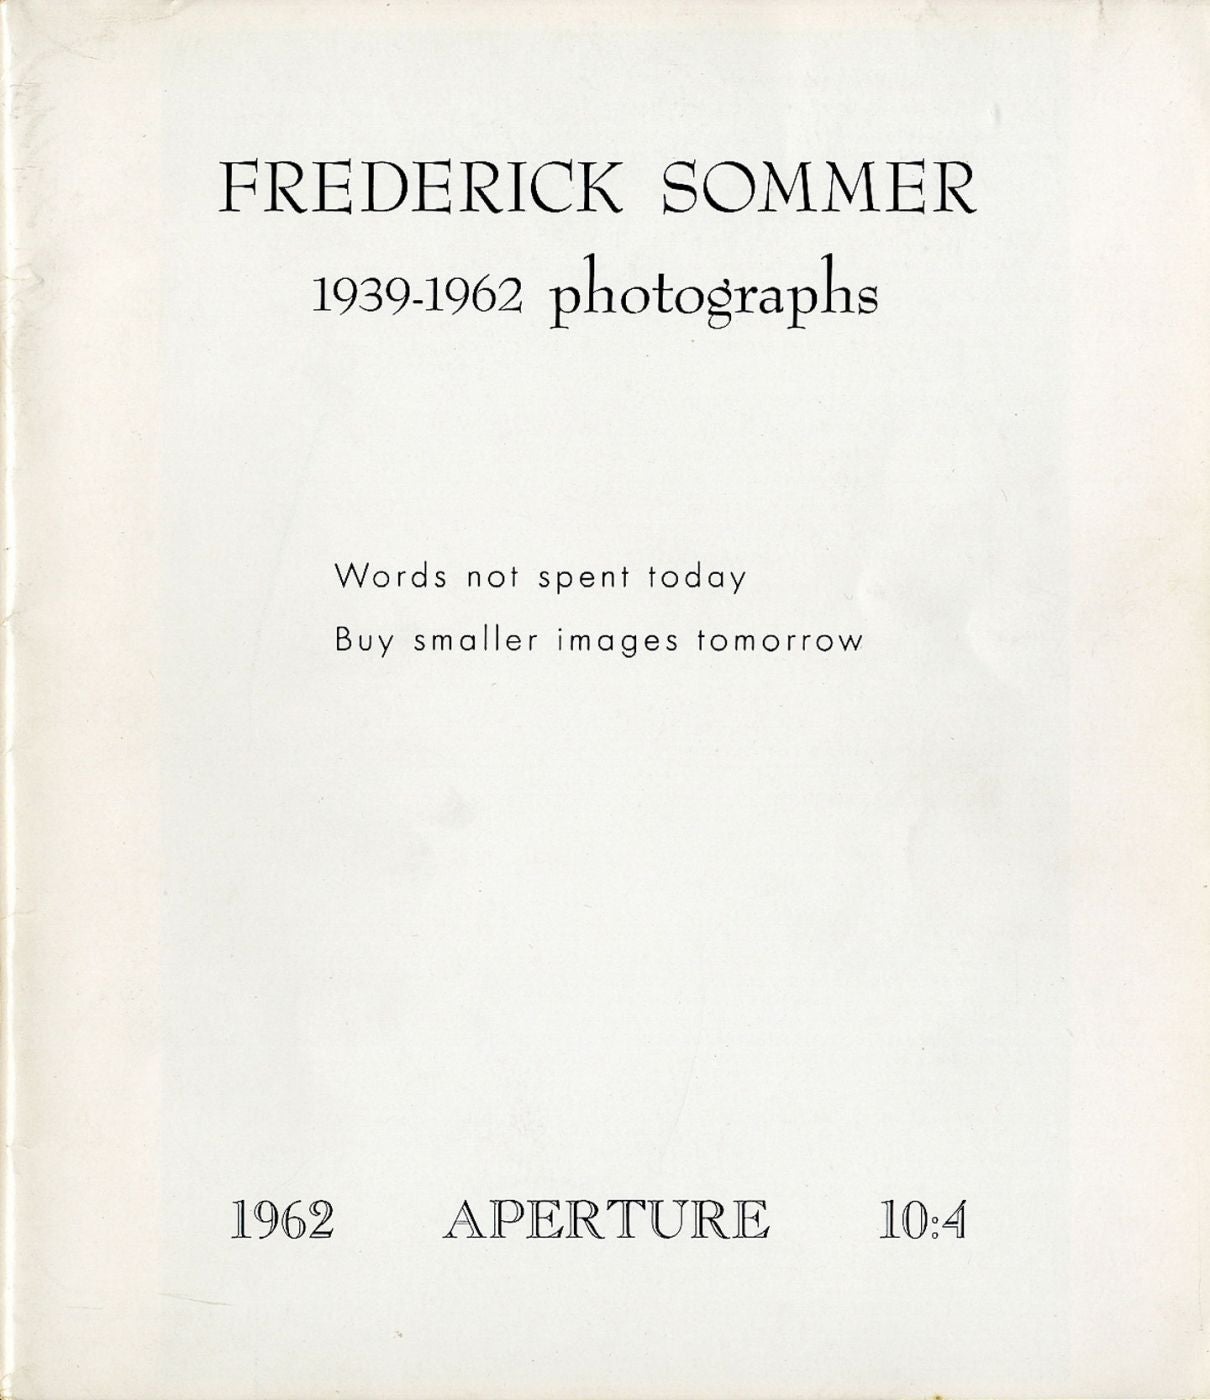 Aperture Volume 10, Number 4 (10:4): Frederick Sommer: 1939-1962 Photographs